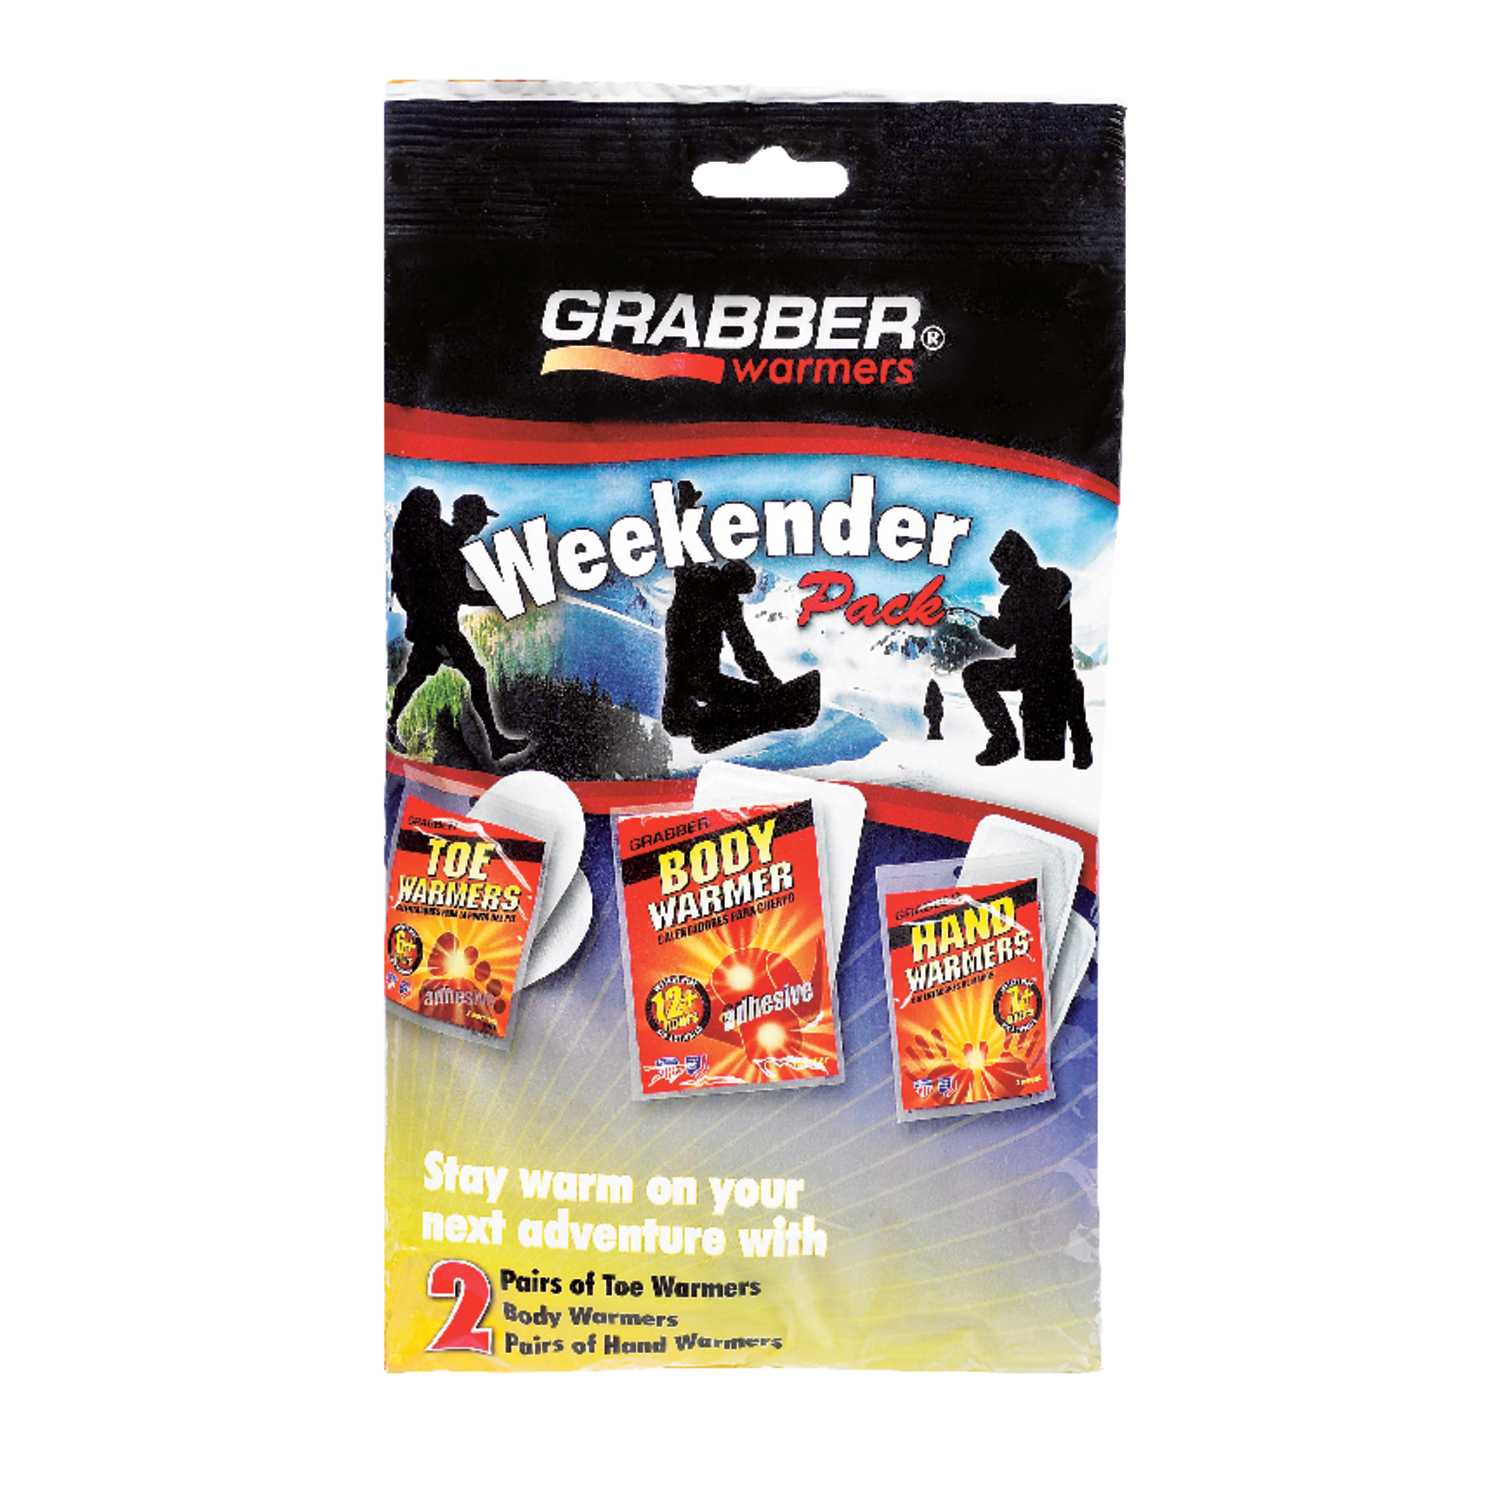 Grabber Weekender Pack Hand and Body Warmer Set - Ace Hardware